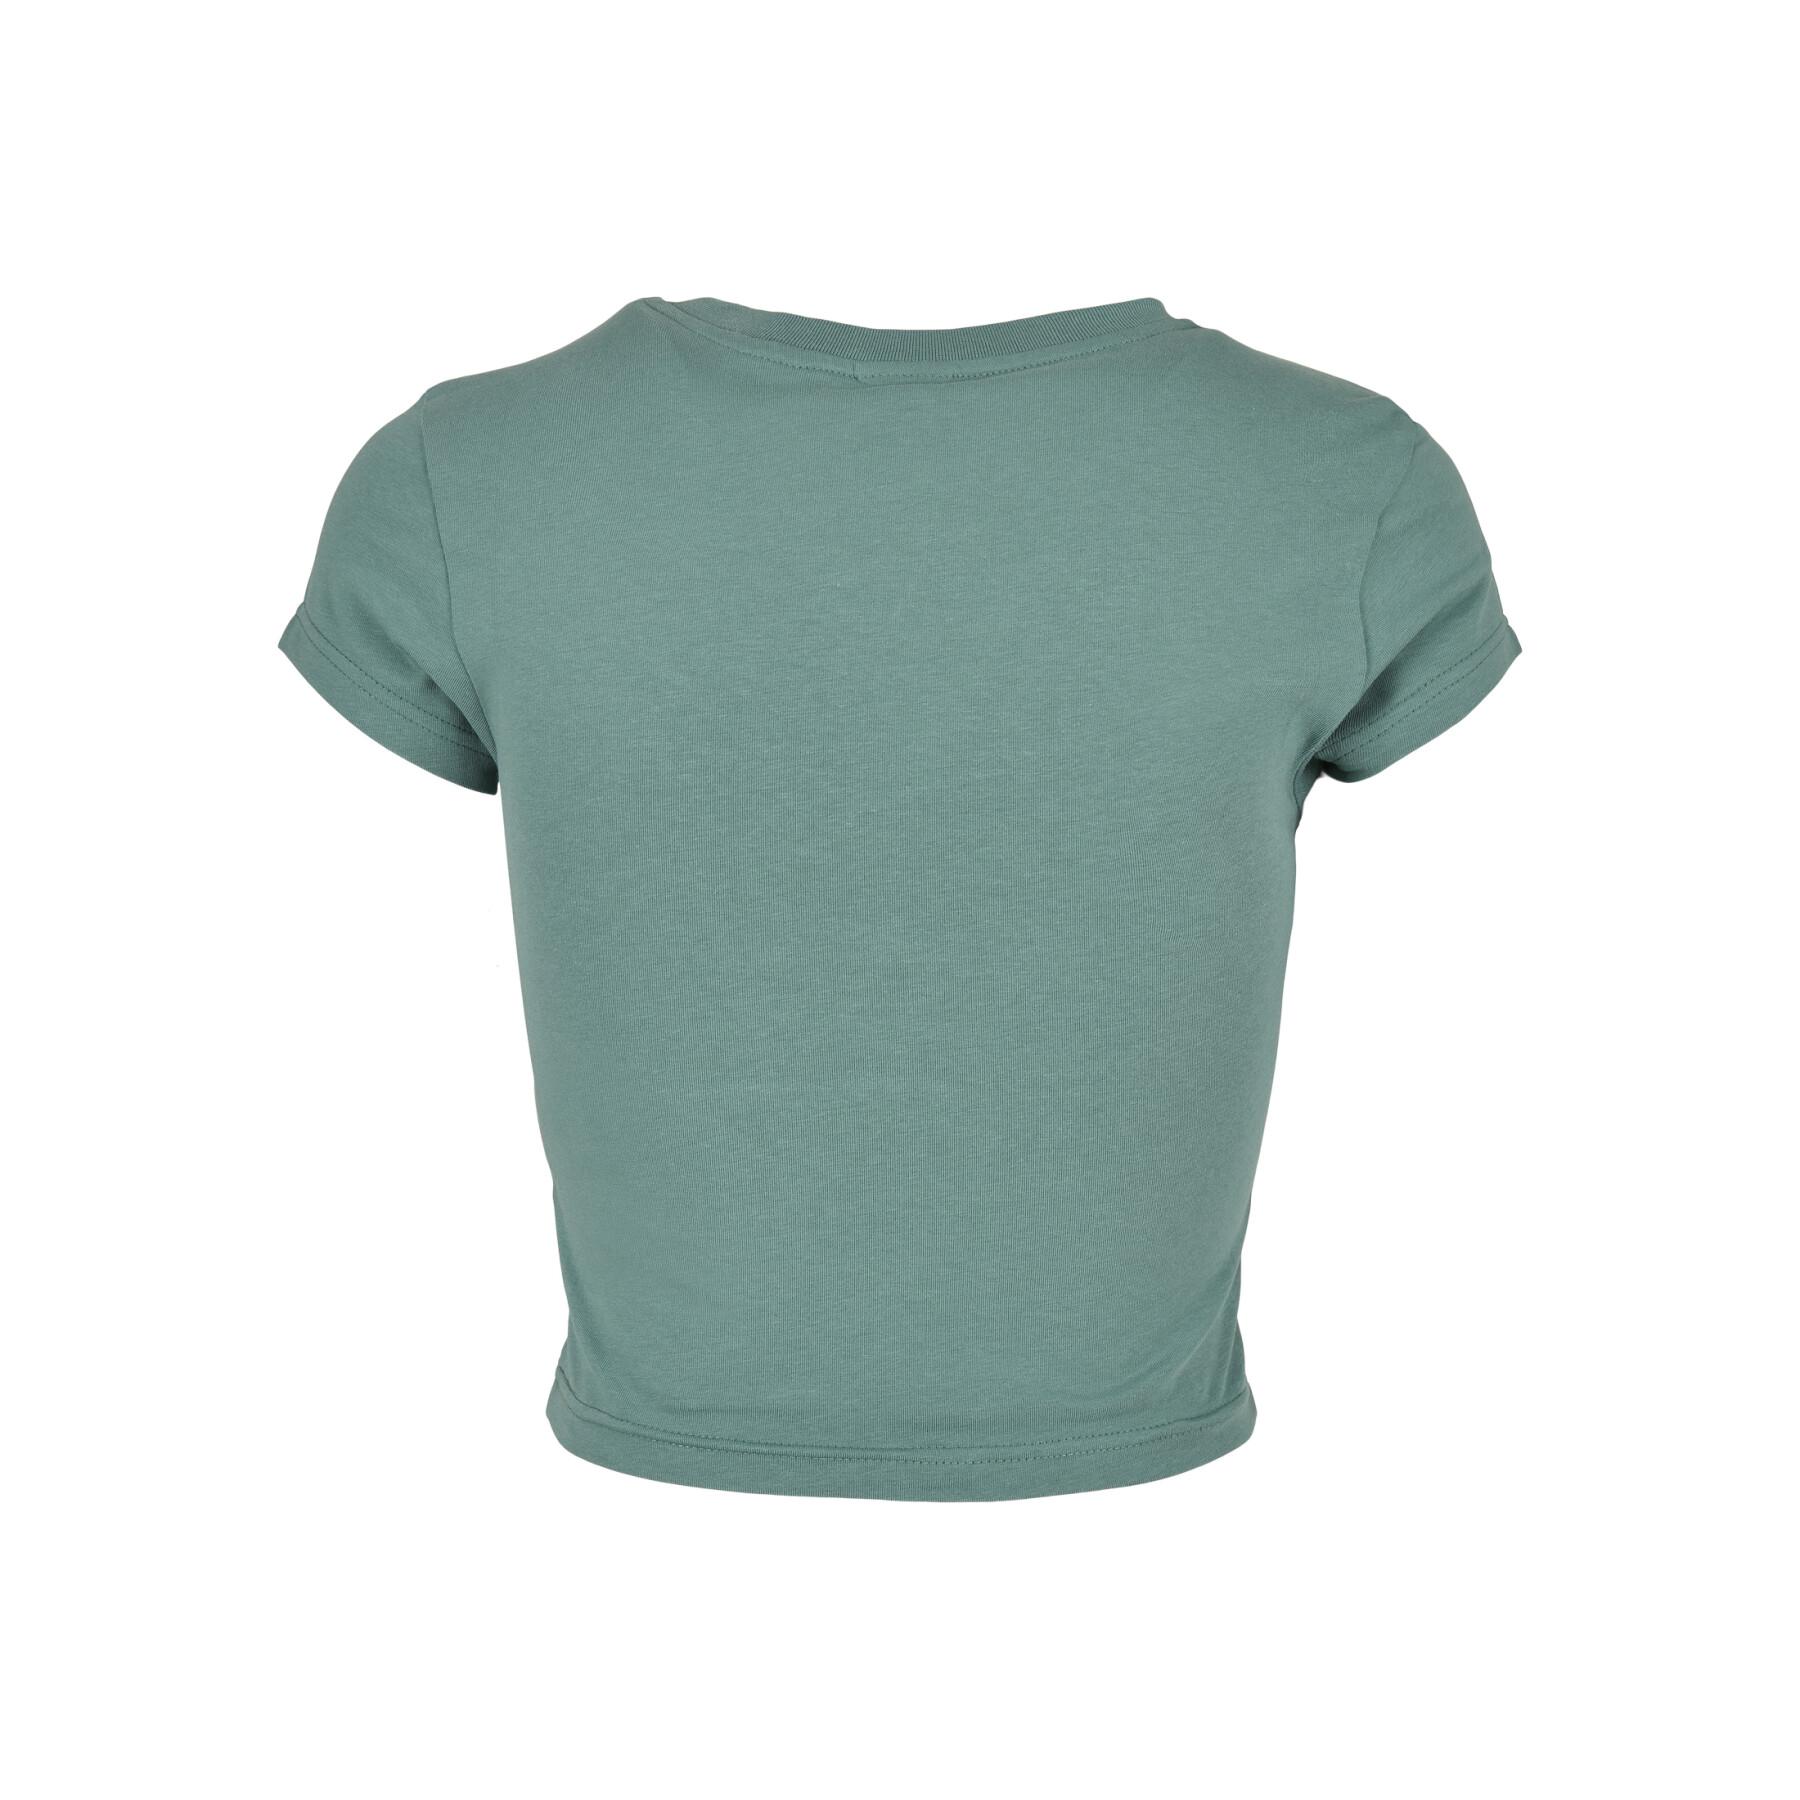 Women's T-shirt Urban Classics stretch cropped (large sizes)